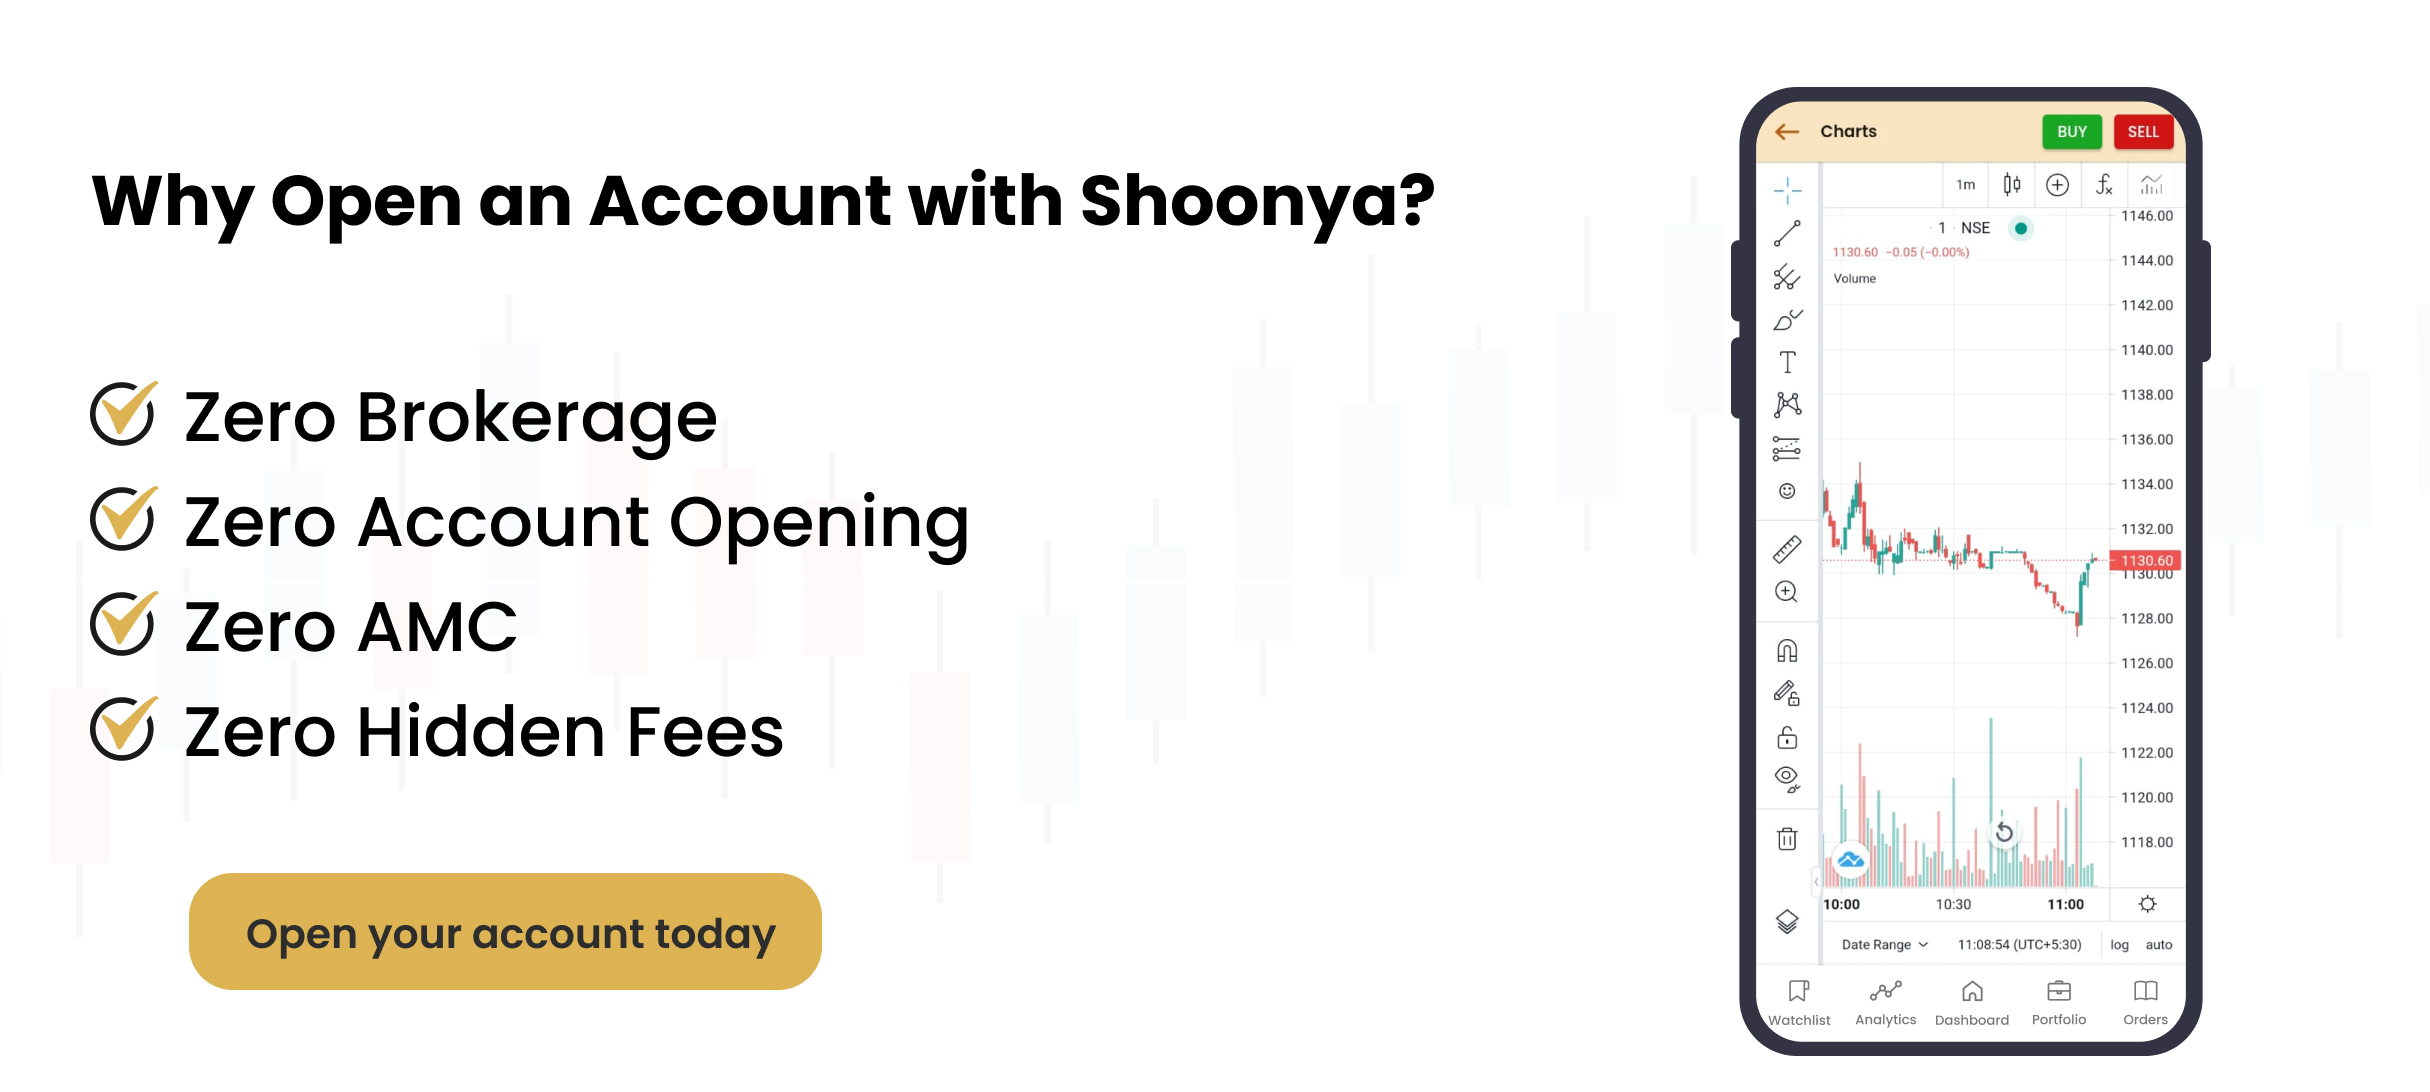 Open your account today with Shoonya